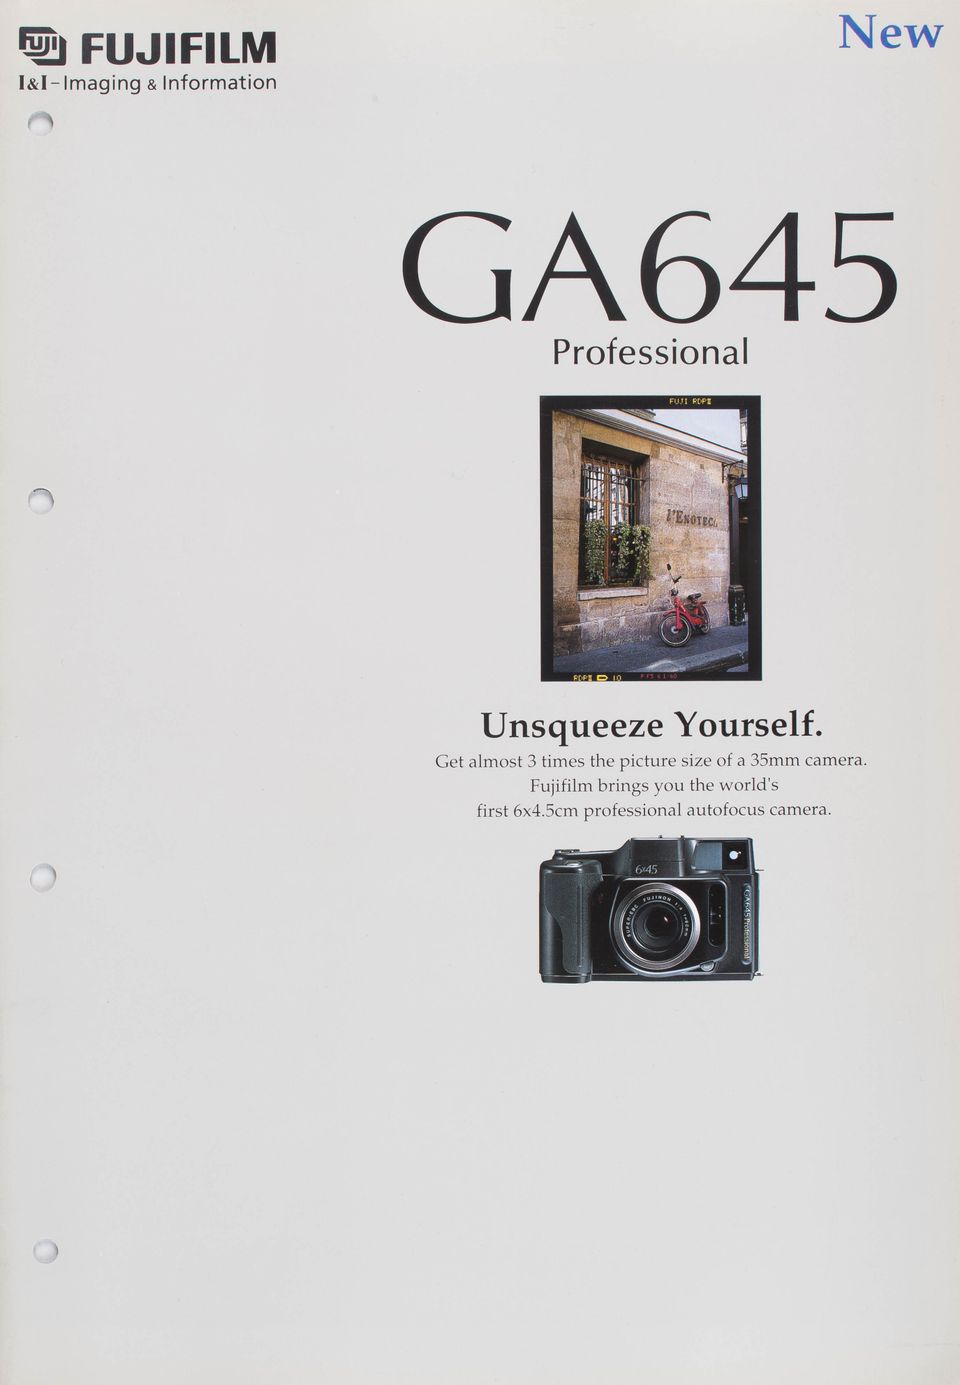 Fujifilm GA645 Professional